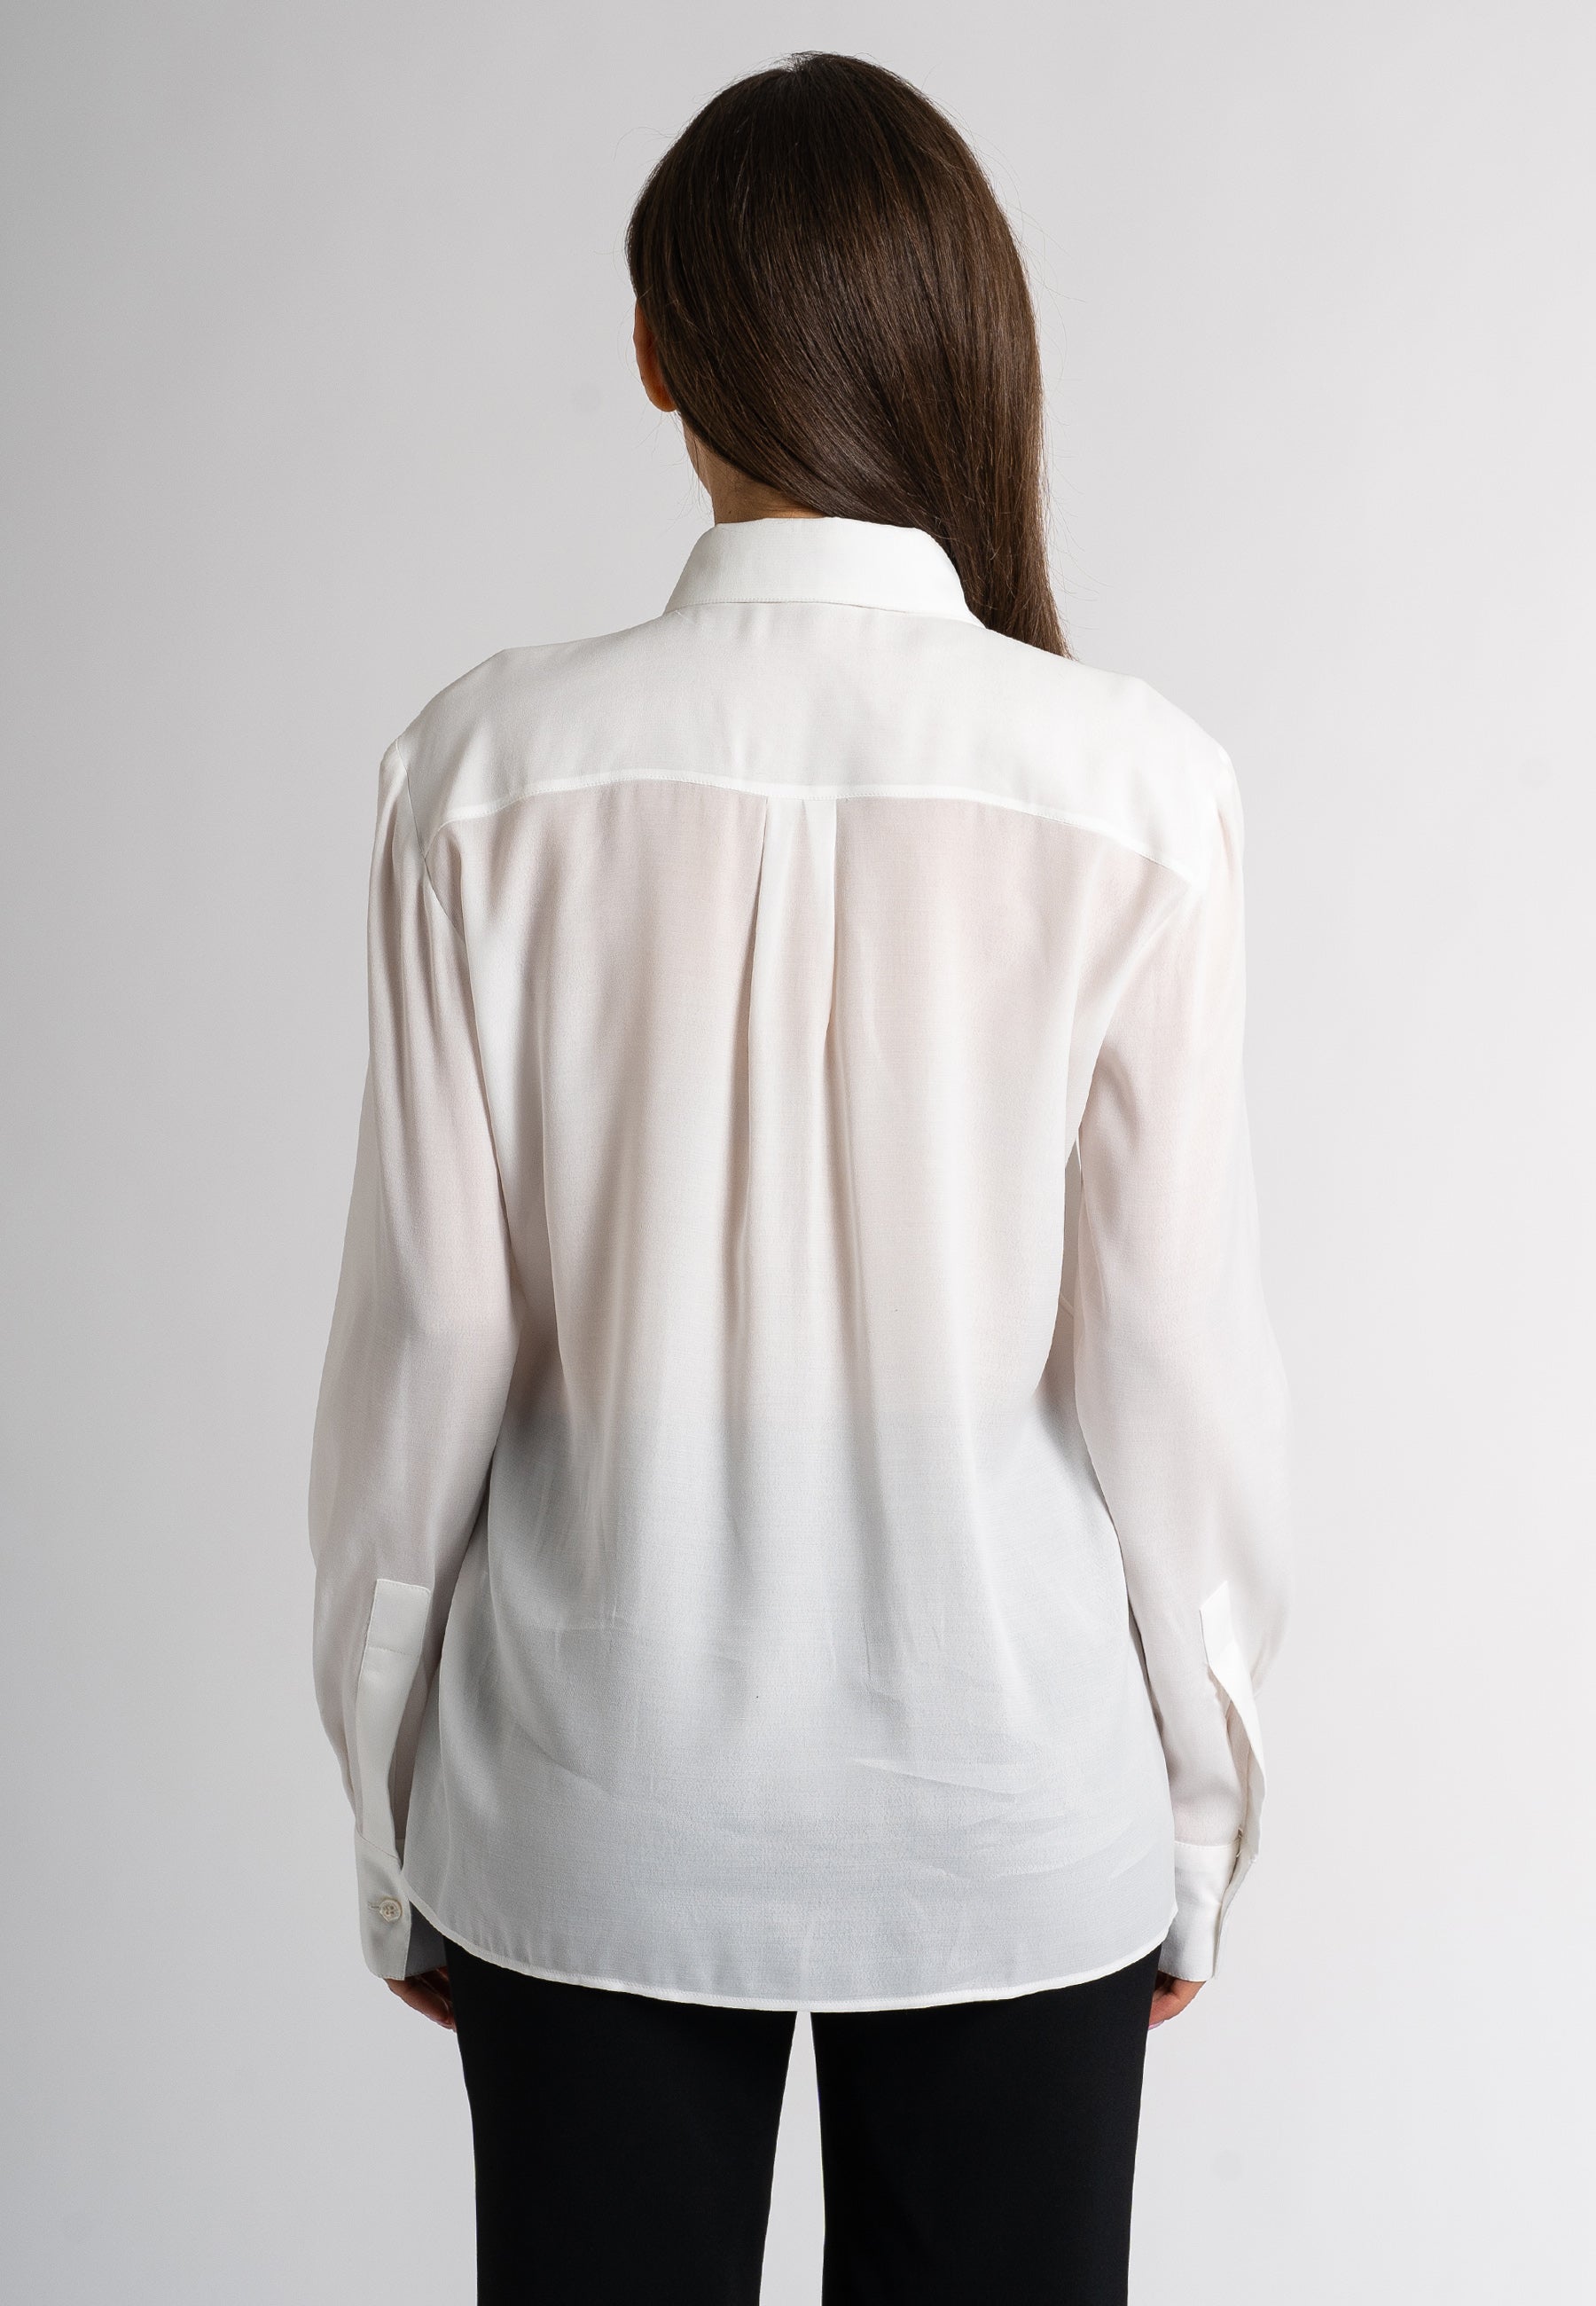  feminine white shirt, ladies long sleeve shirt, viscose blouse, stylish white shirt, pocket shirt